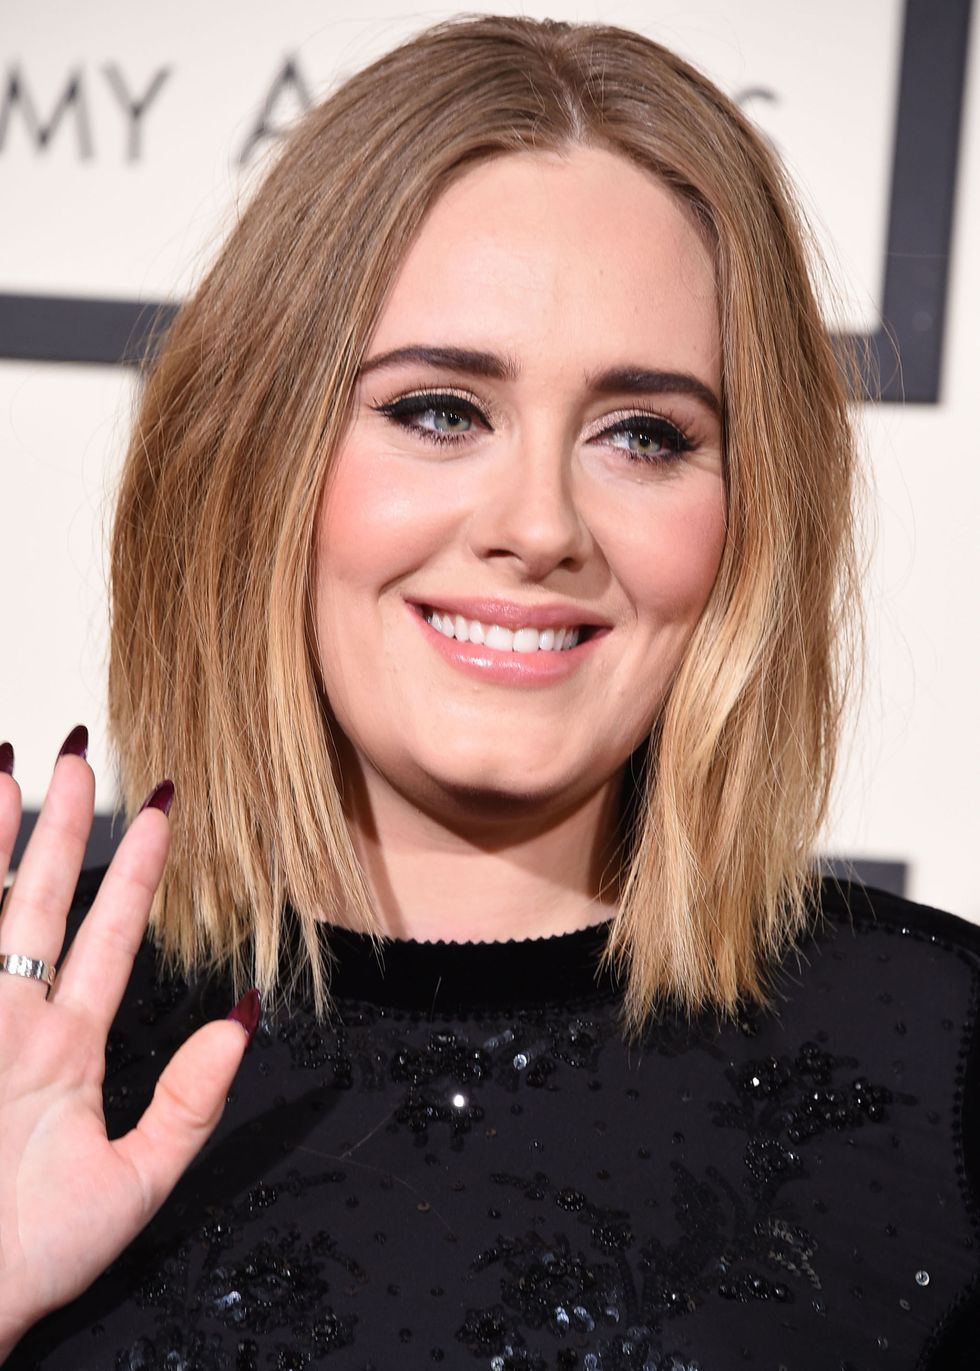 Grammy Awards beauty looks - Adele